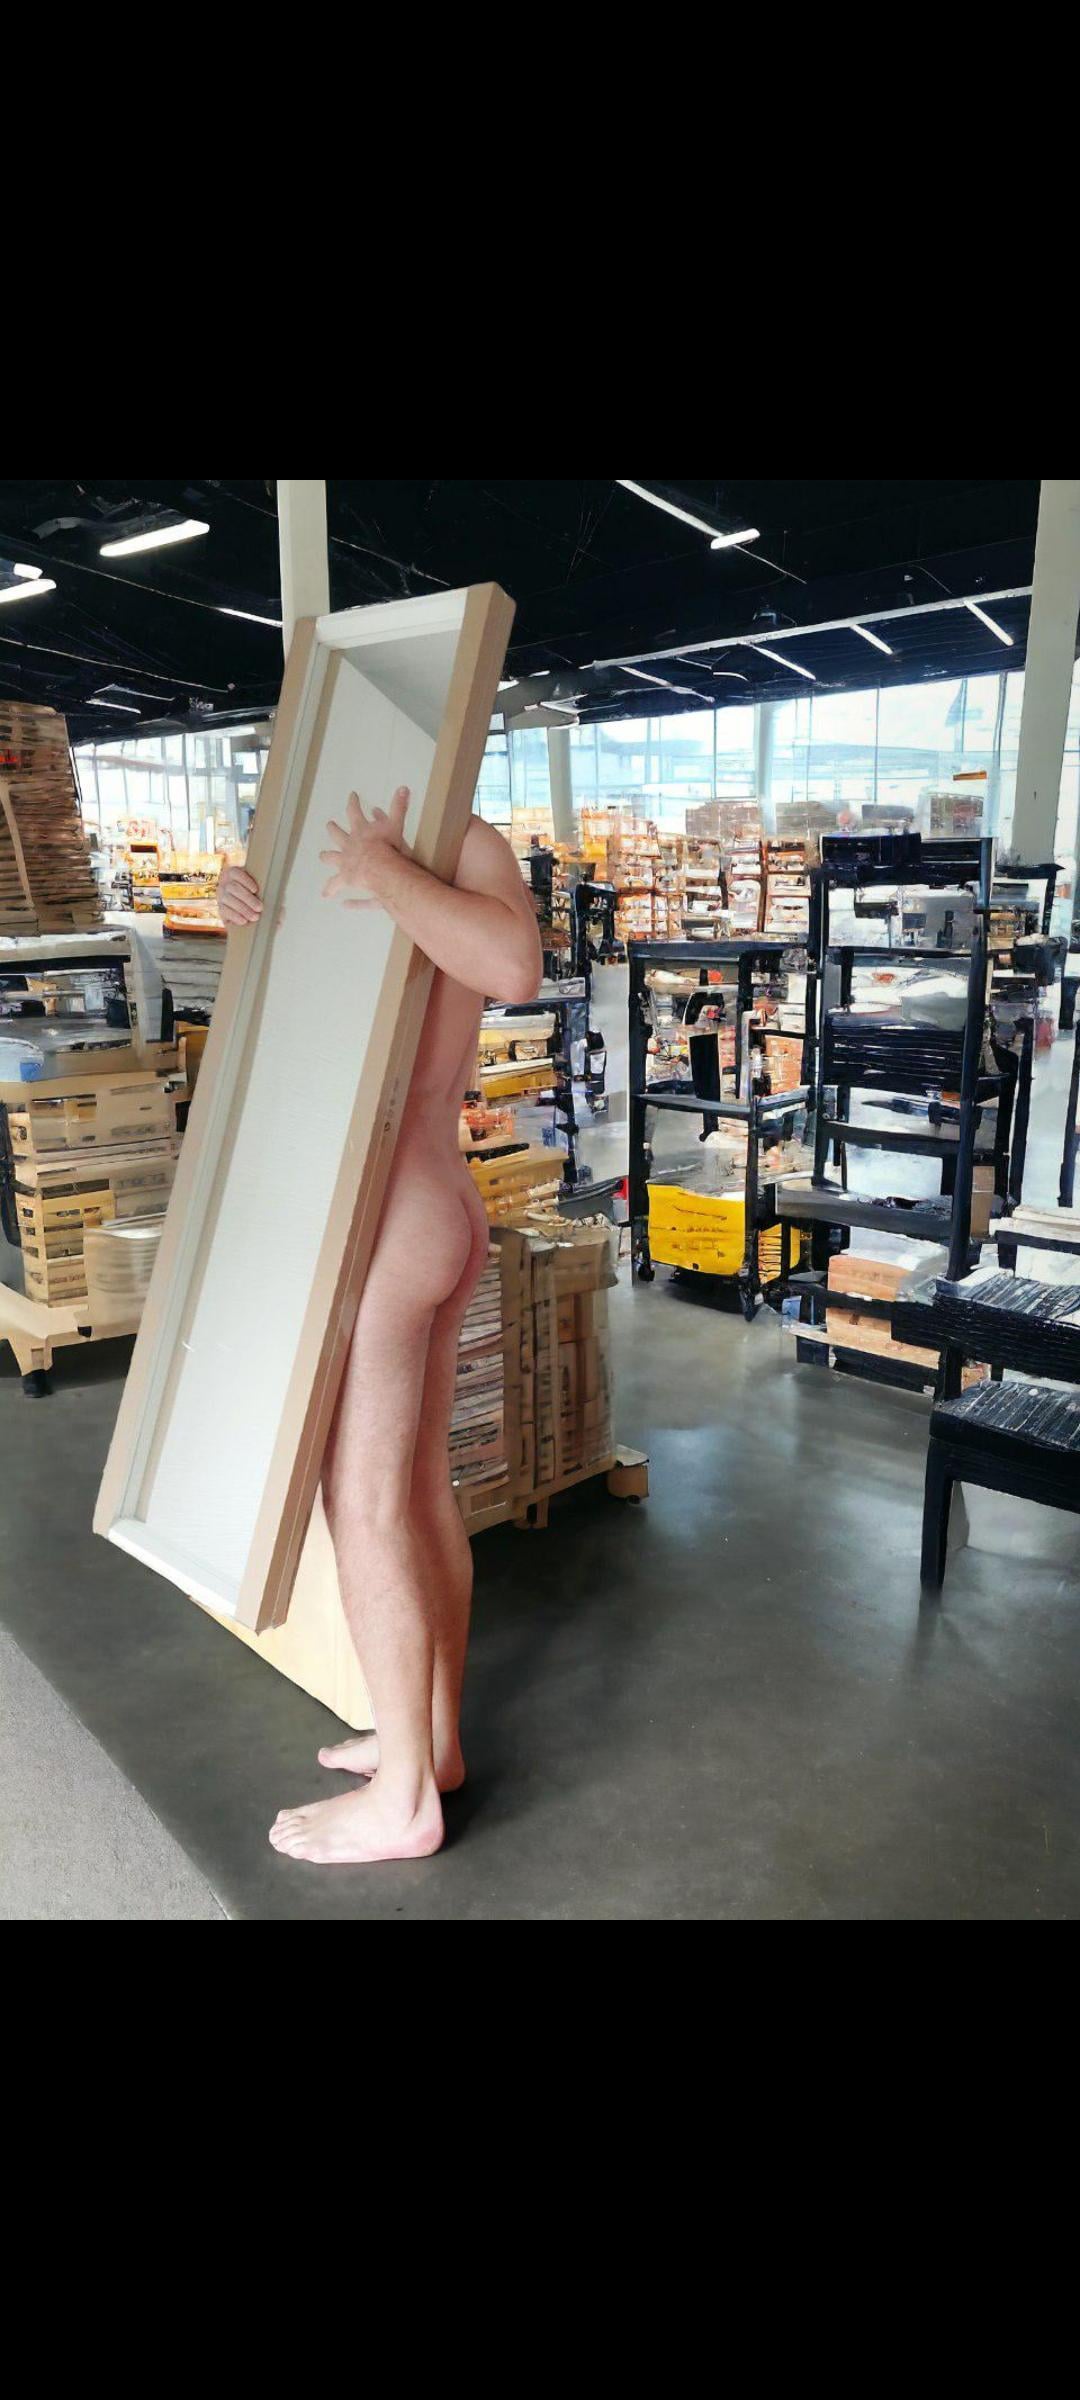 Its risky taking nudes ar IKEA love it